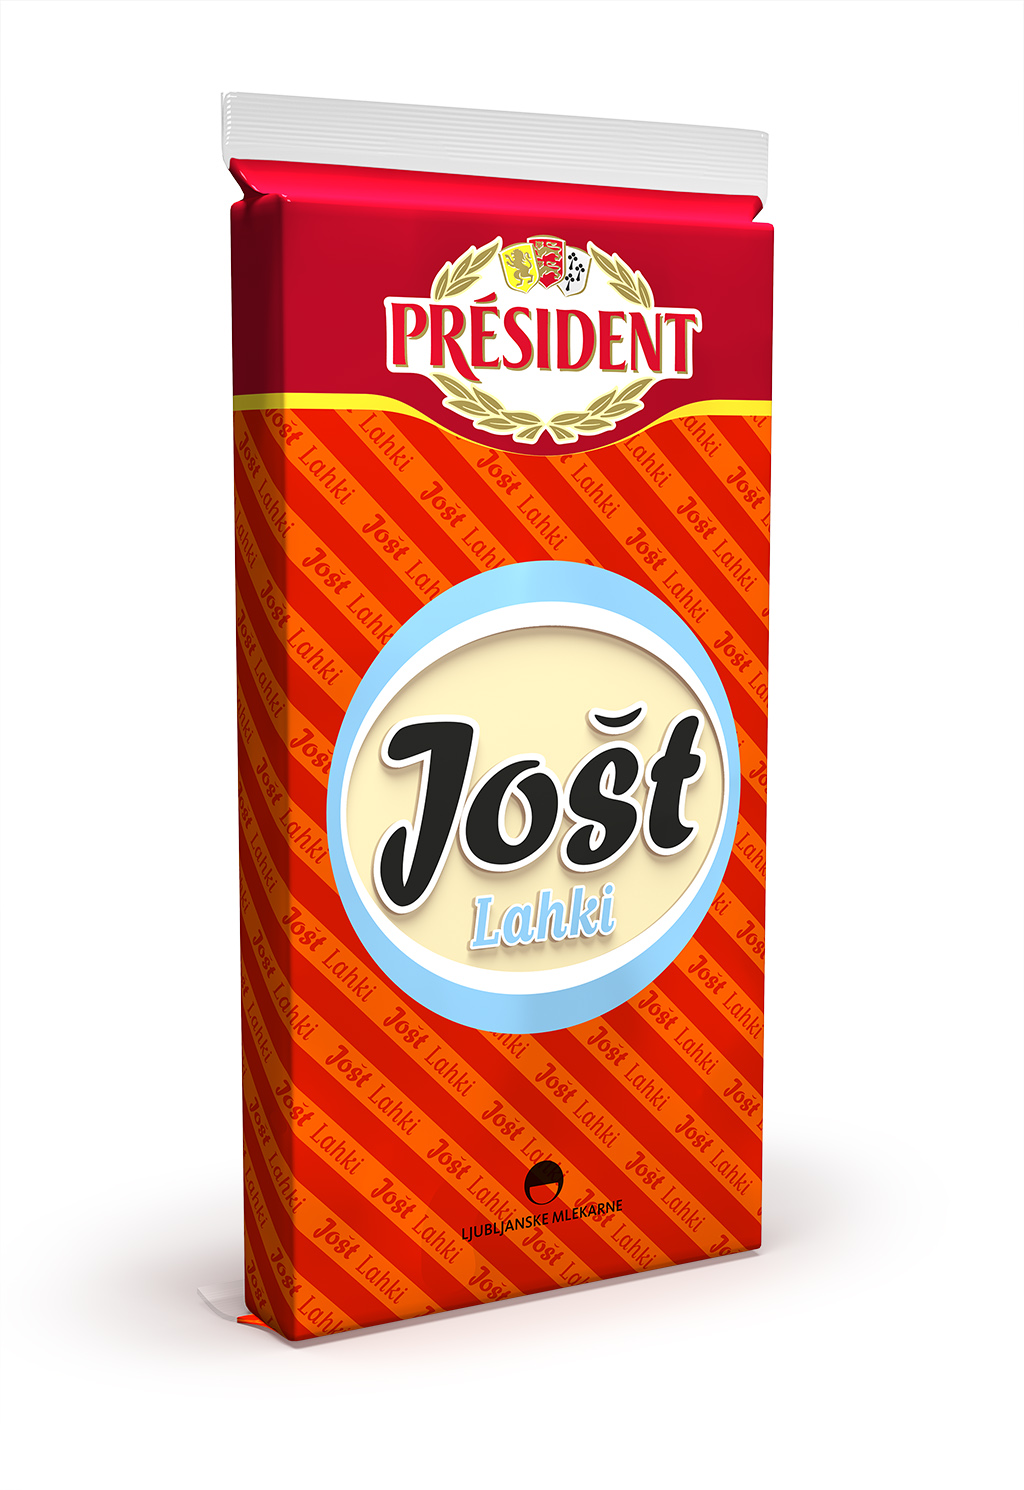 Président Jošt light; semi-hard medium fat cheese